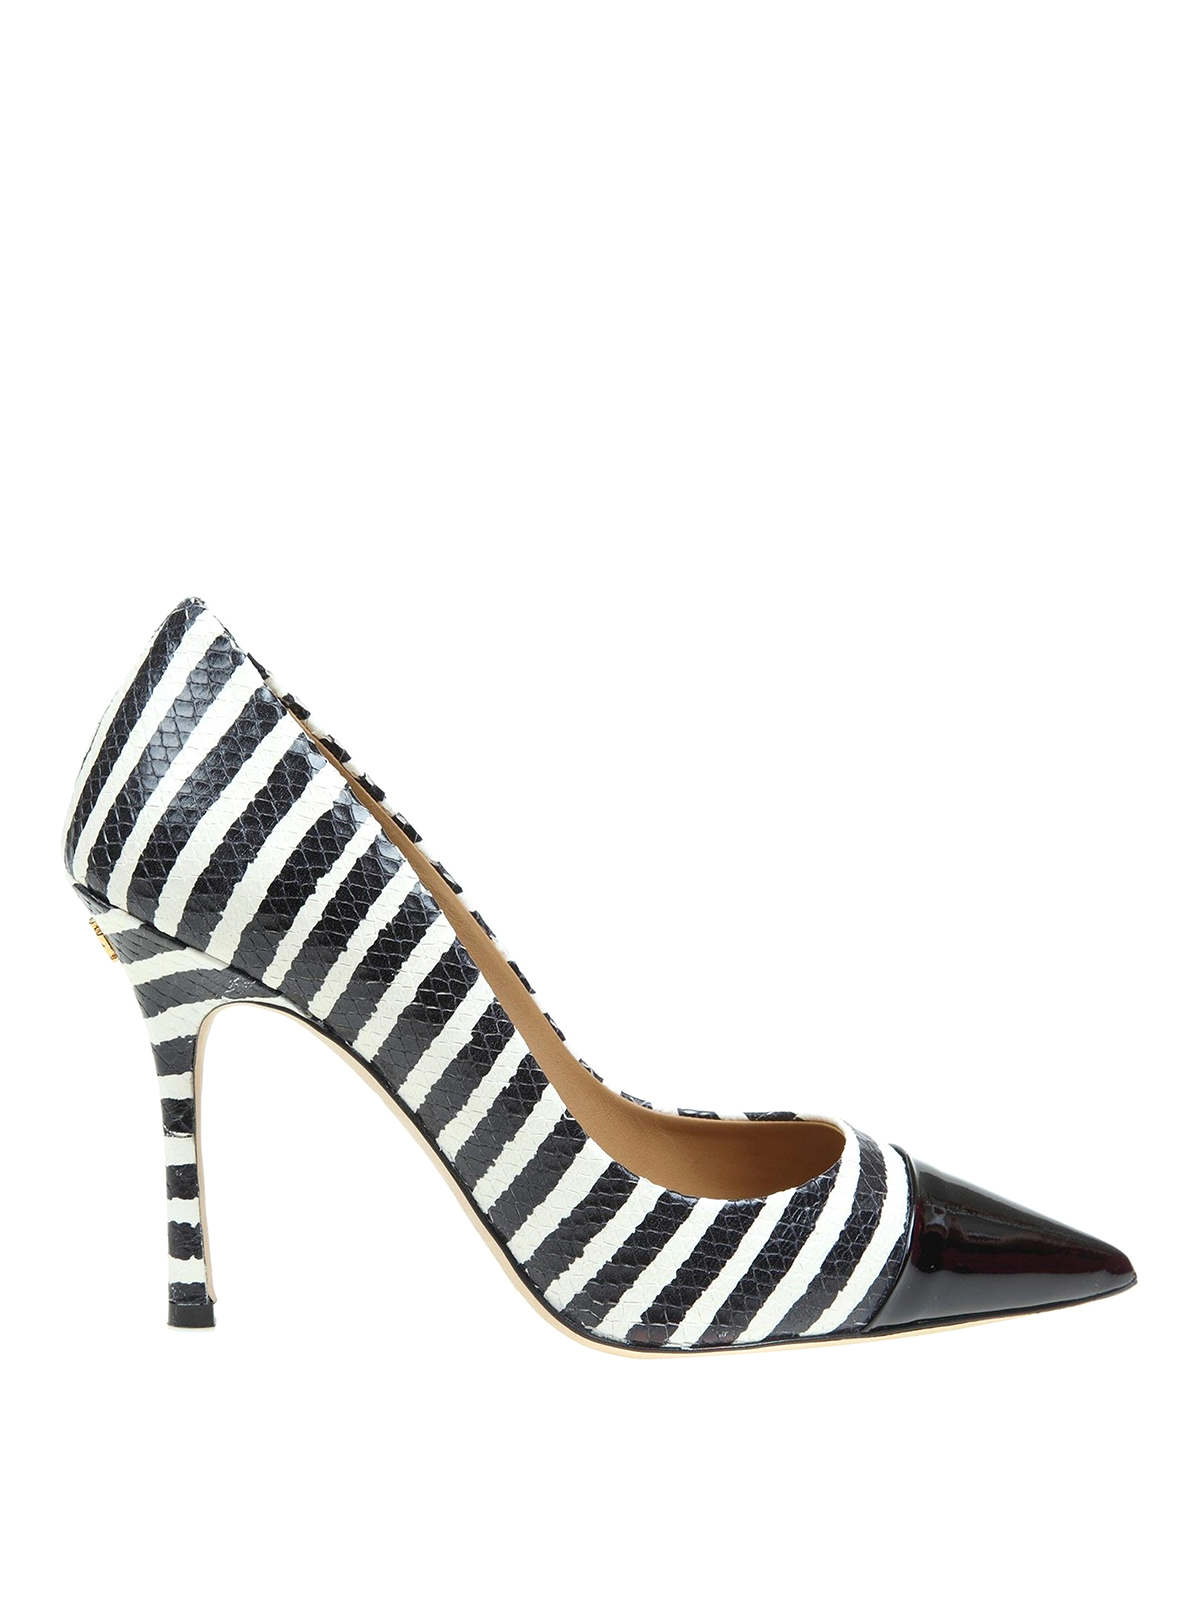 Court shoes Tory Burch - Penelope pumps - 74130105 | Shop online at iKRIX